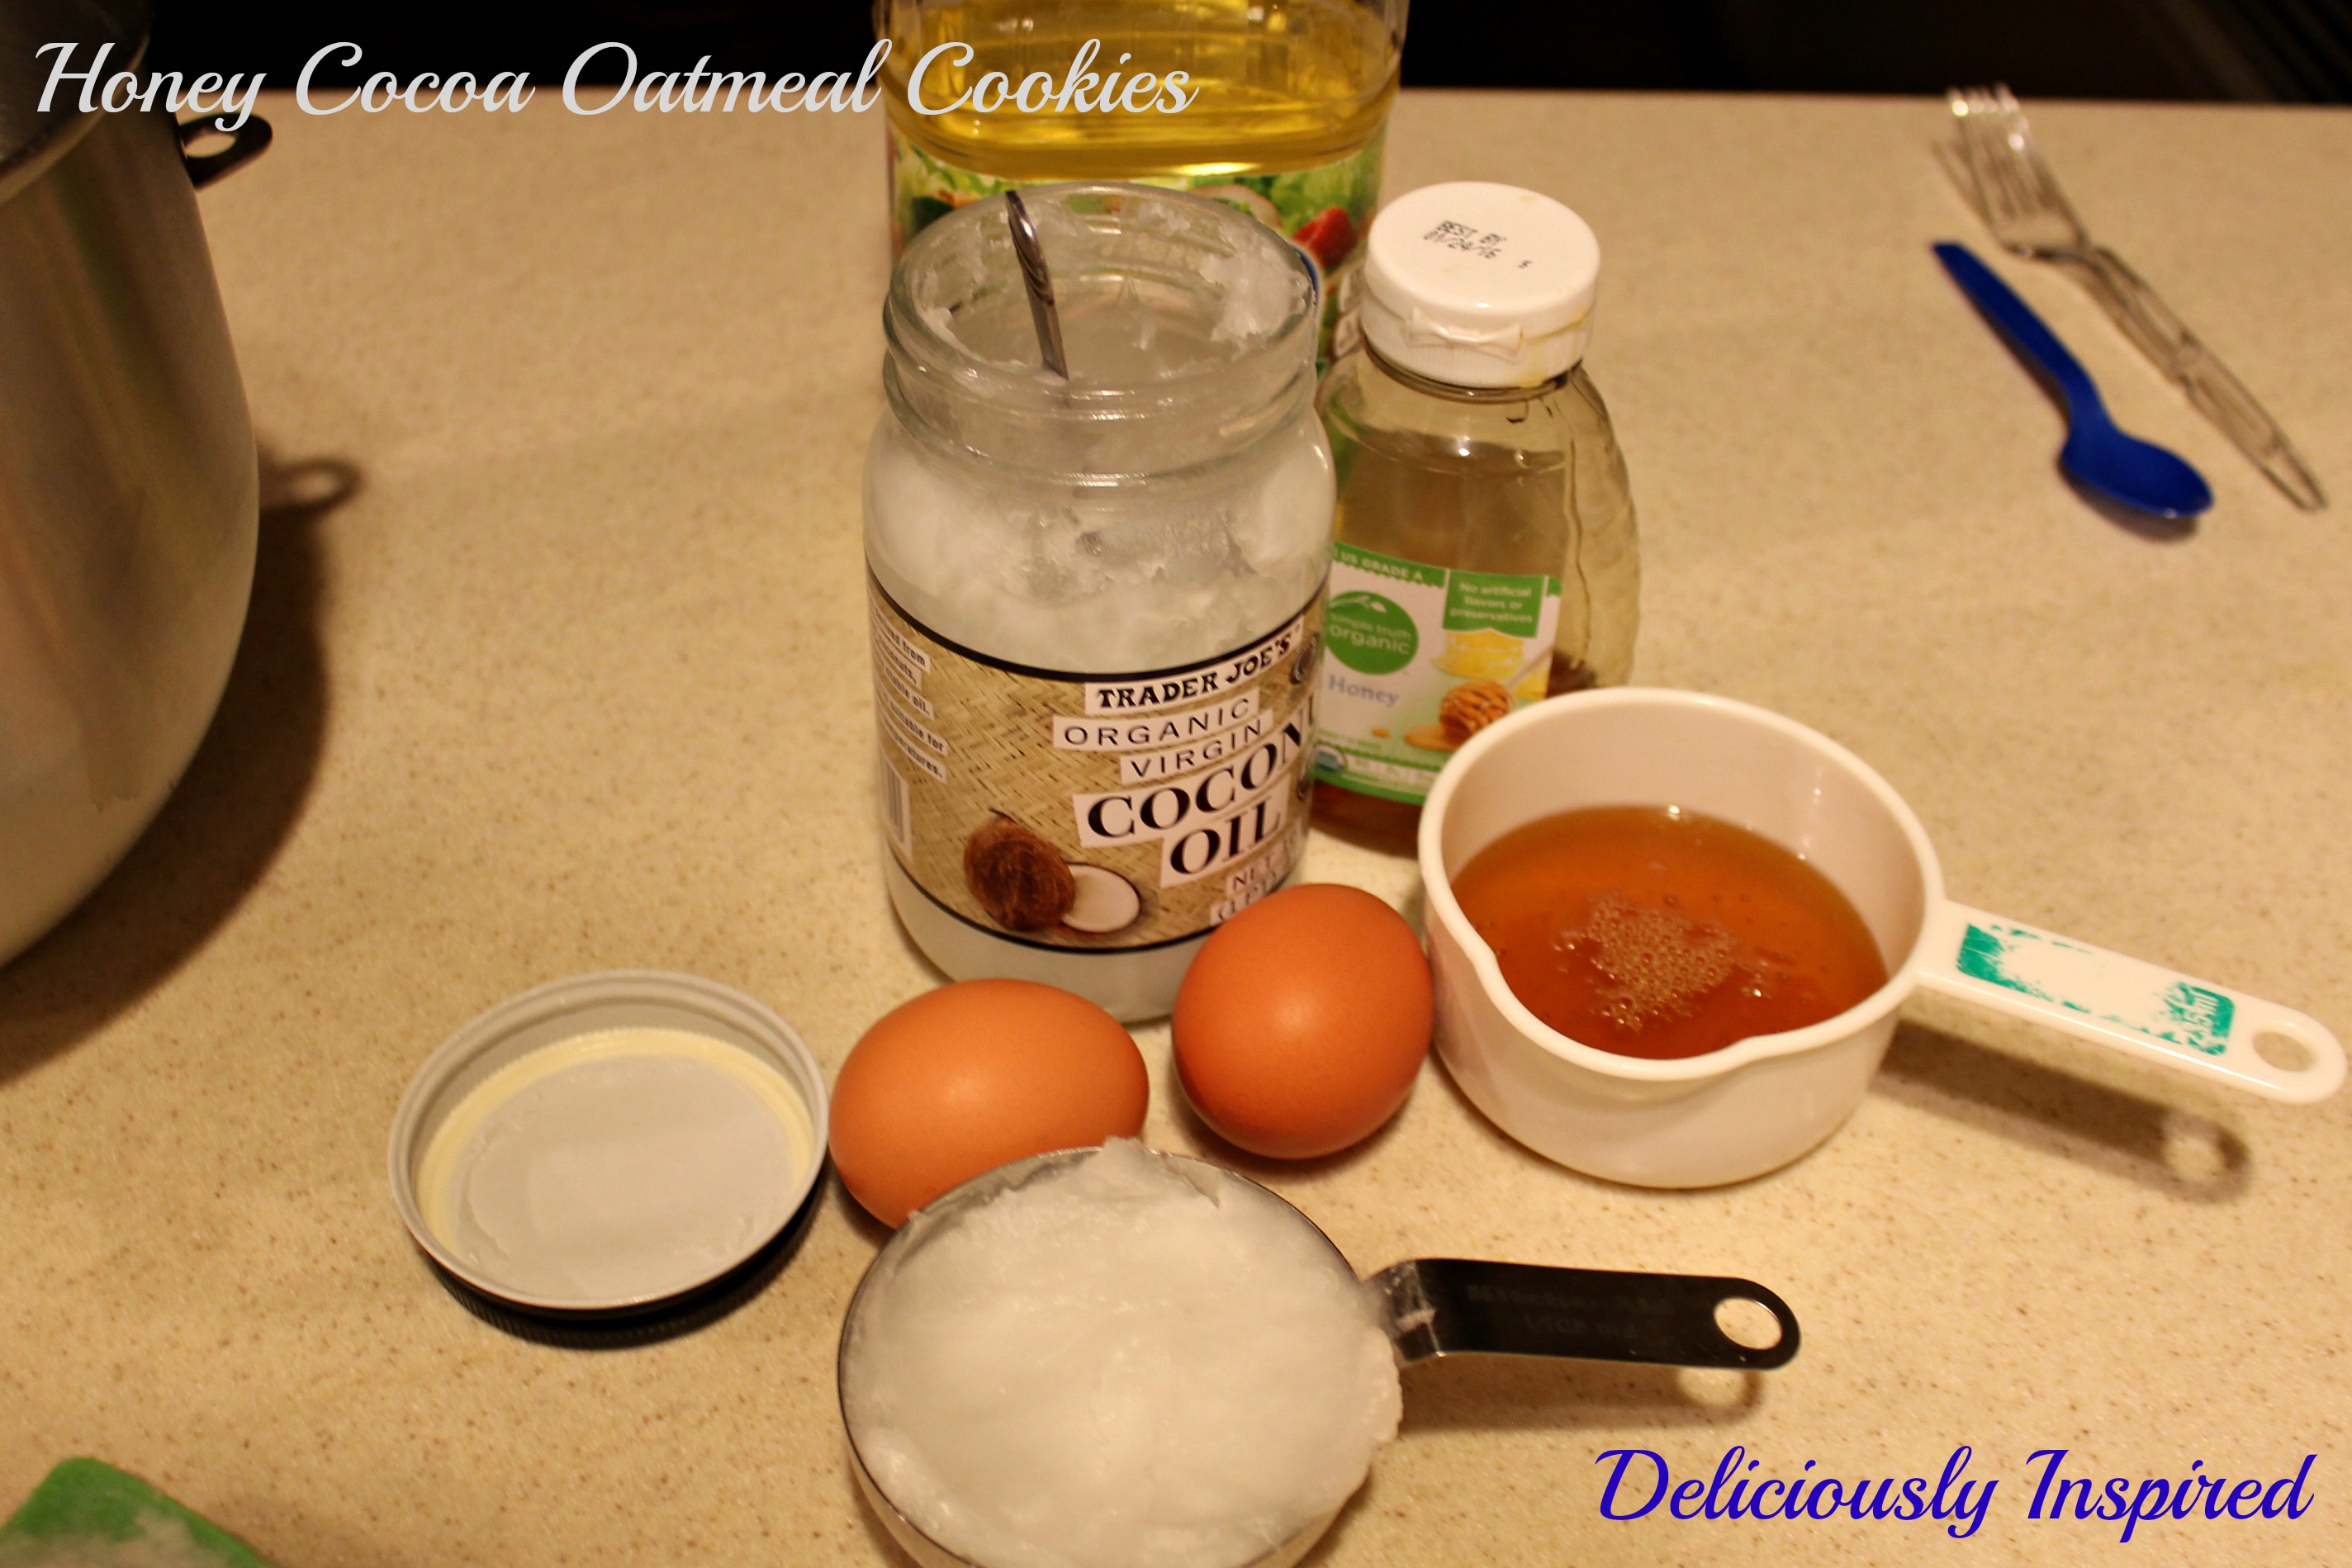 Honey Cocoa Oatmeal Cookies - Wet Ingredients